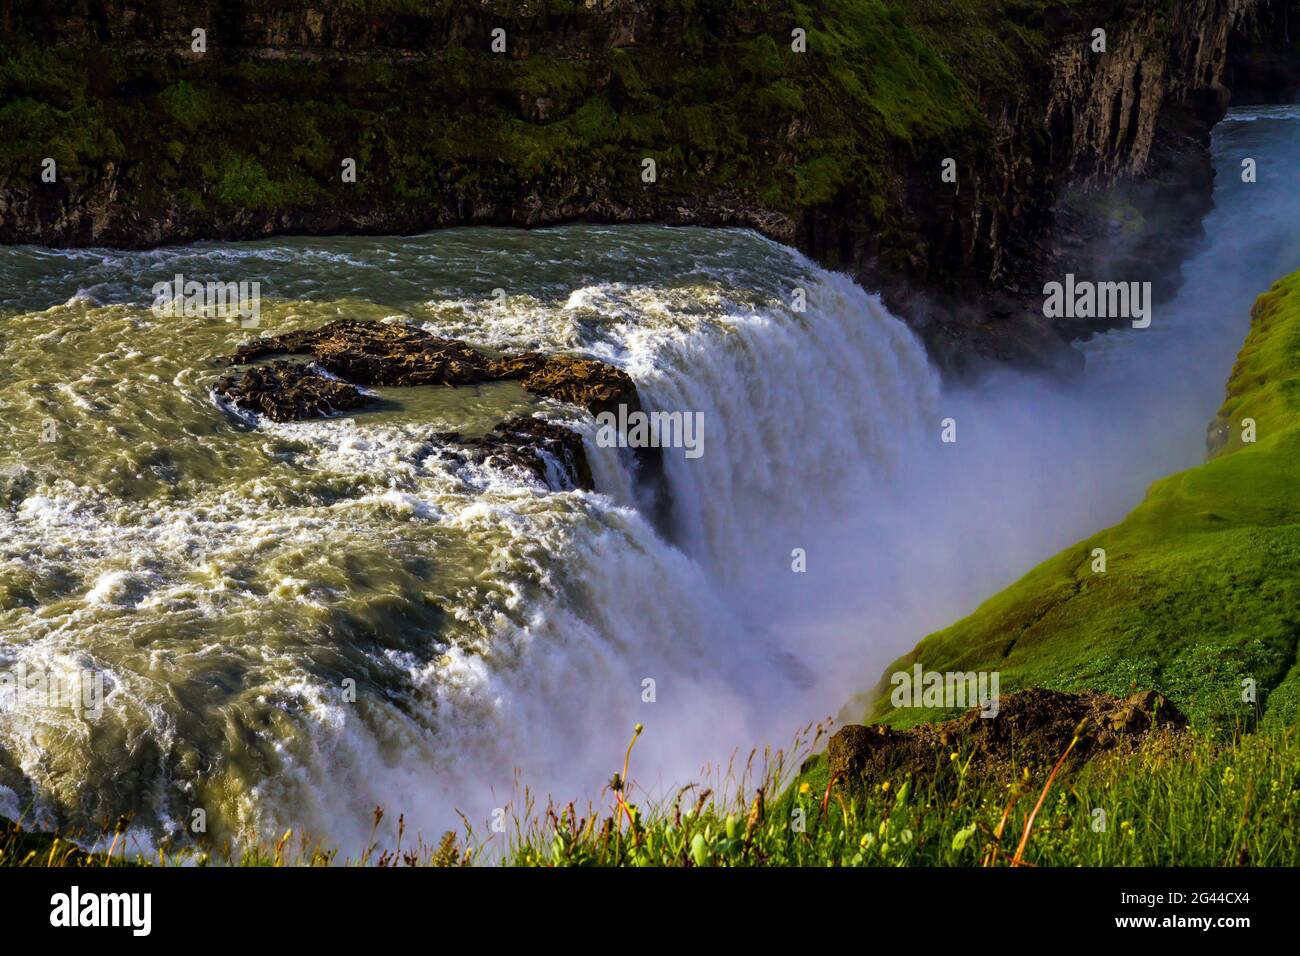 The bubbling waterfall Stock Photo